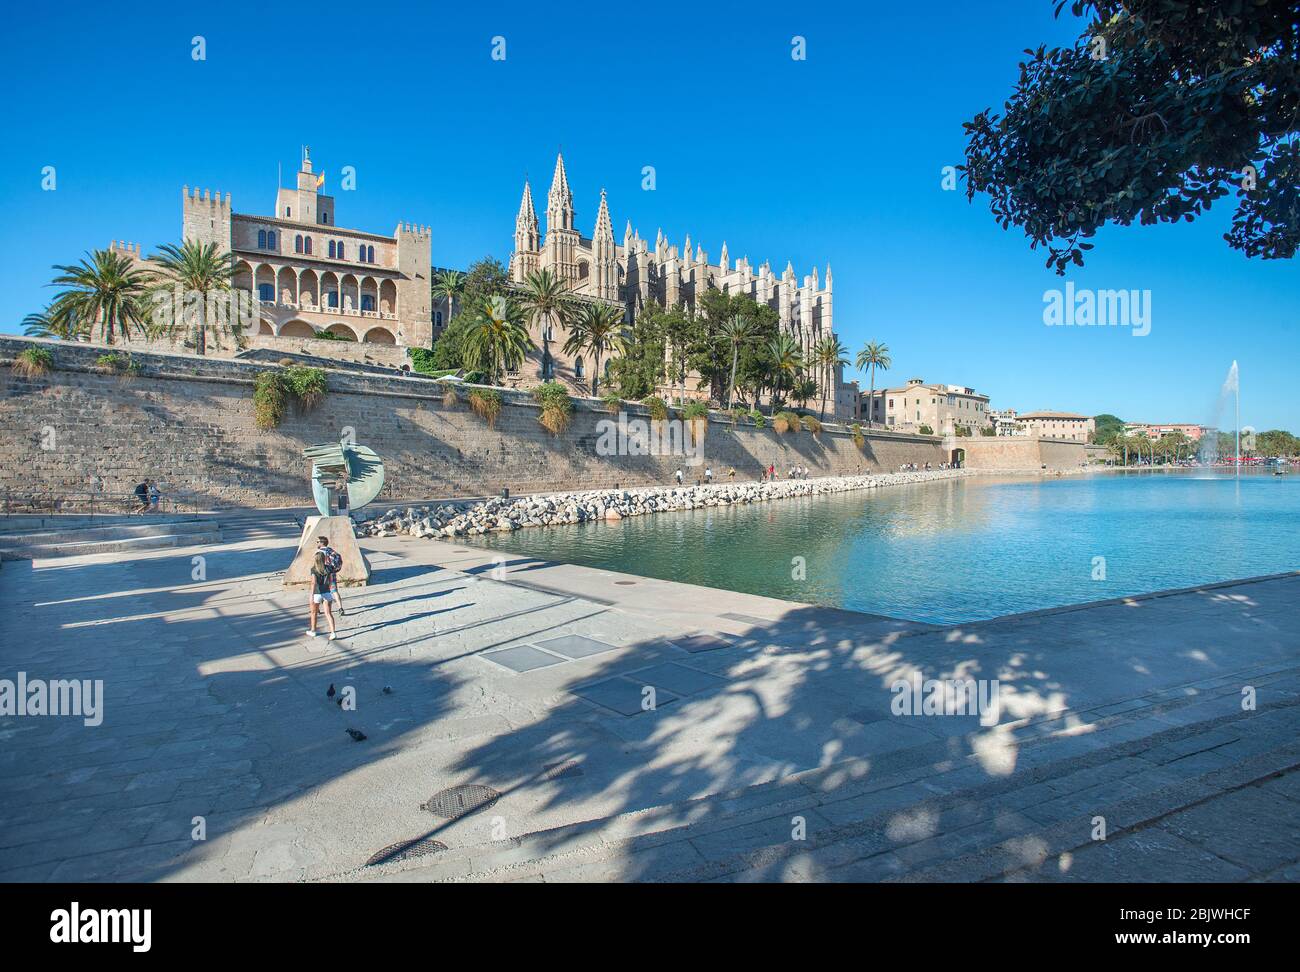 The Cathedral and Almudaina Palace from Parc de la mar, Palma de Mallorca, Balearics, Spain Stock Photo